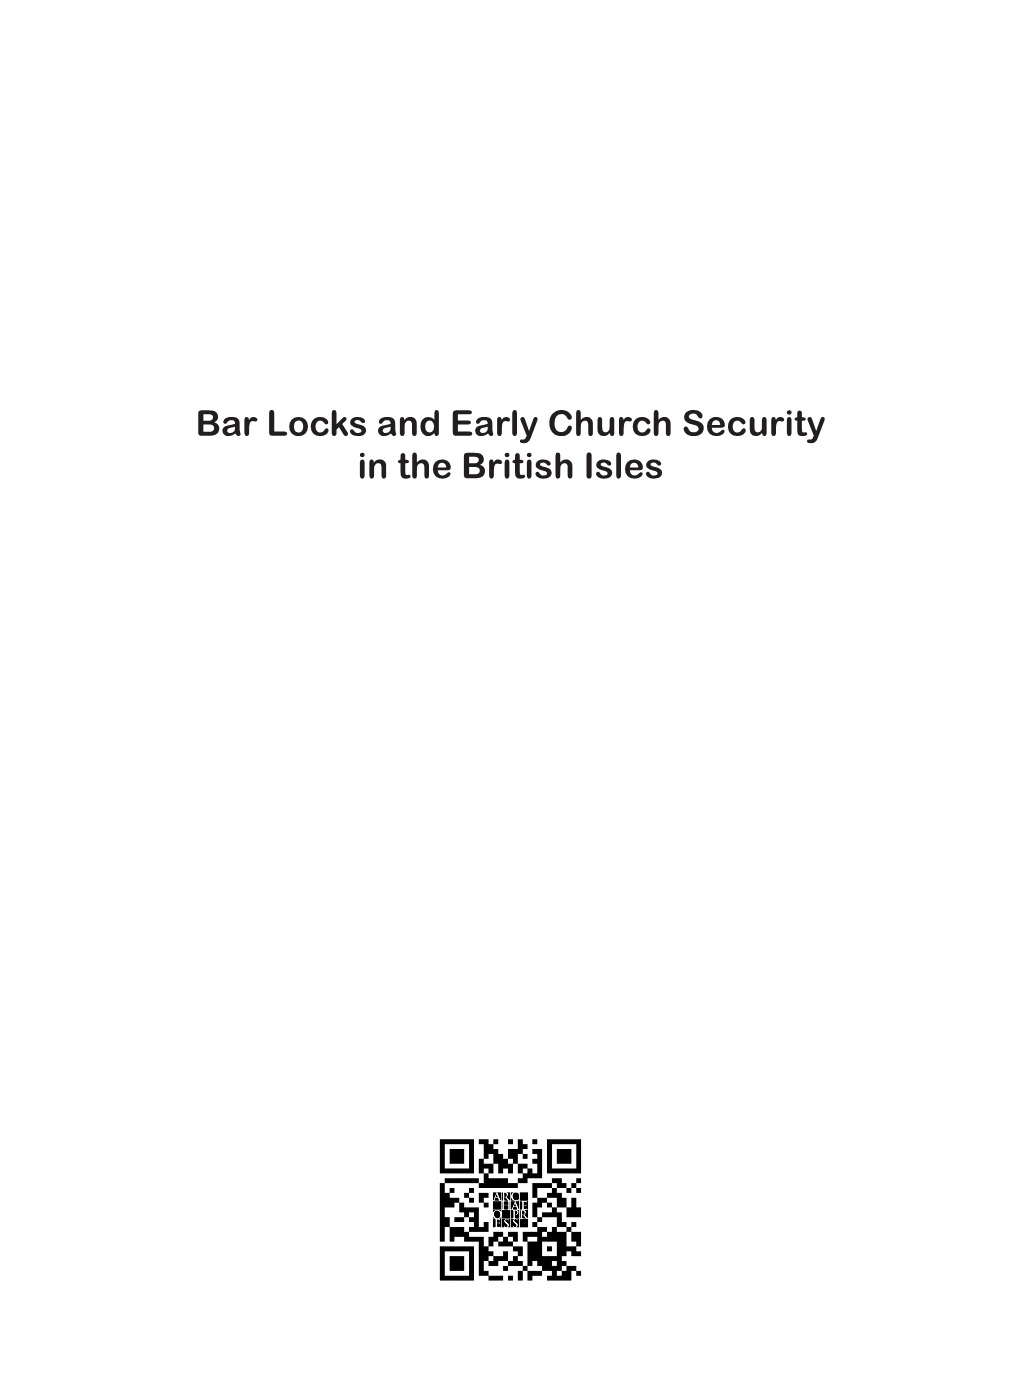 Bar Locks and Early Church Security in the British Isles Professor John F